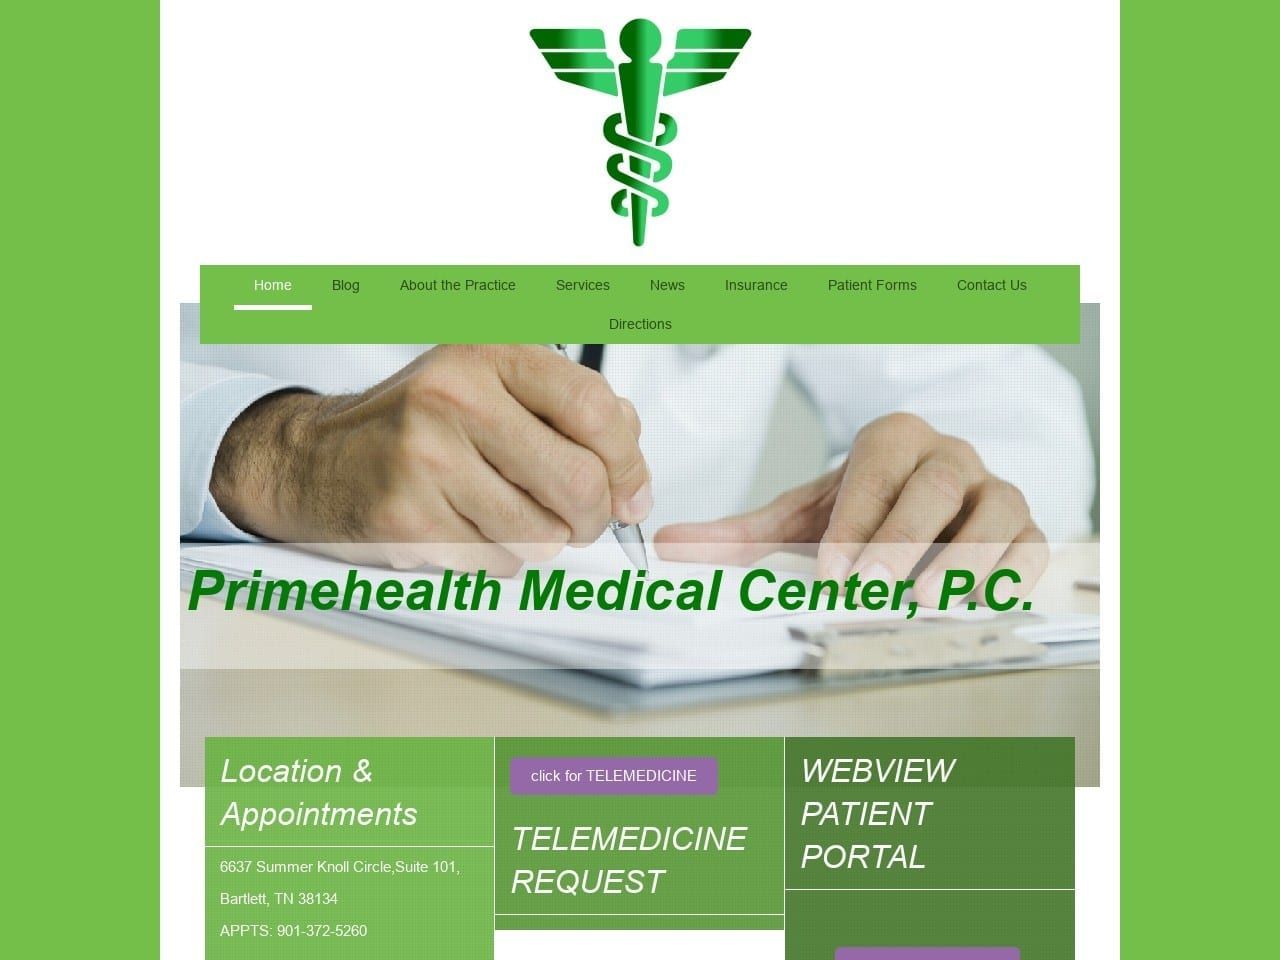 Primehealth Medical Center Website Screenshot from primehealthclinic.com